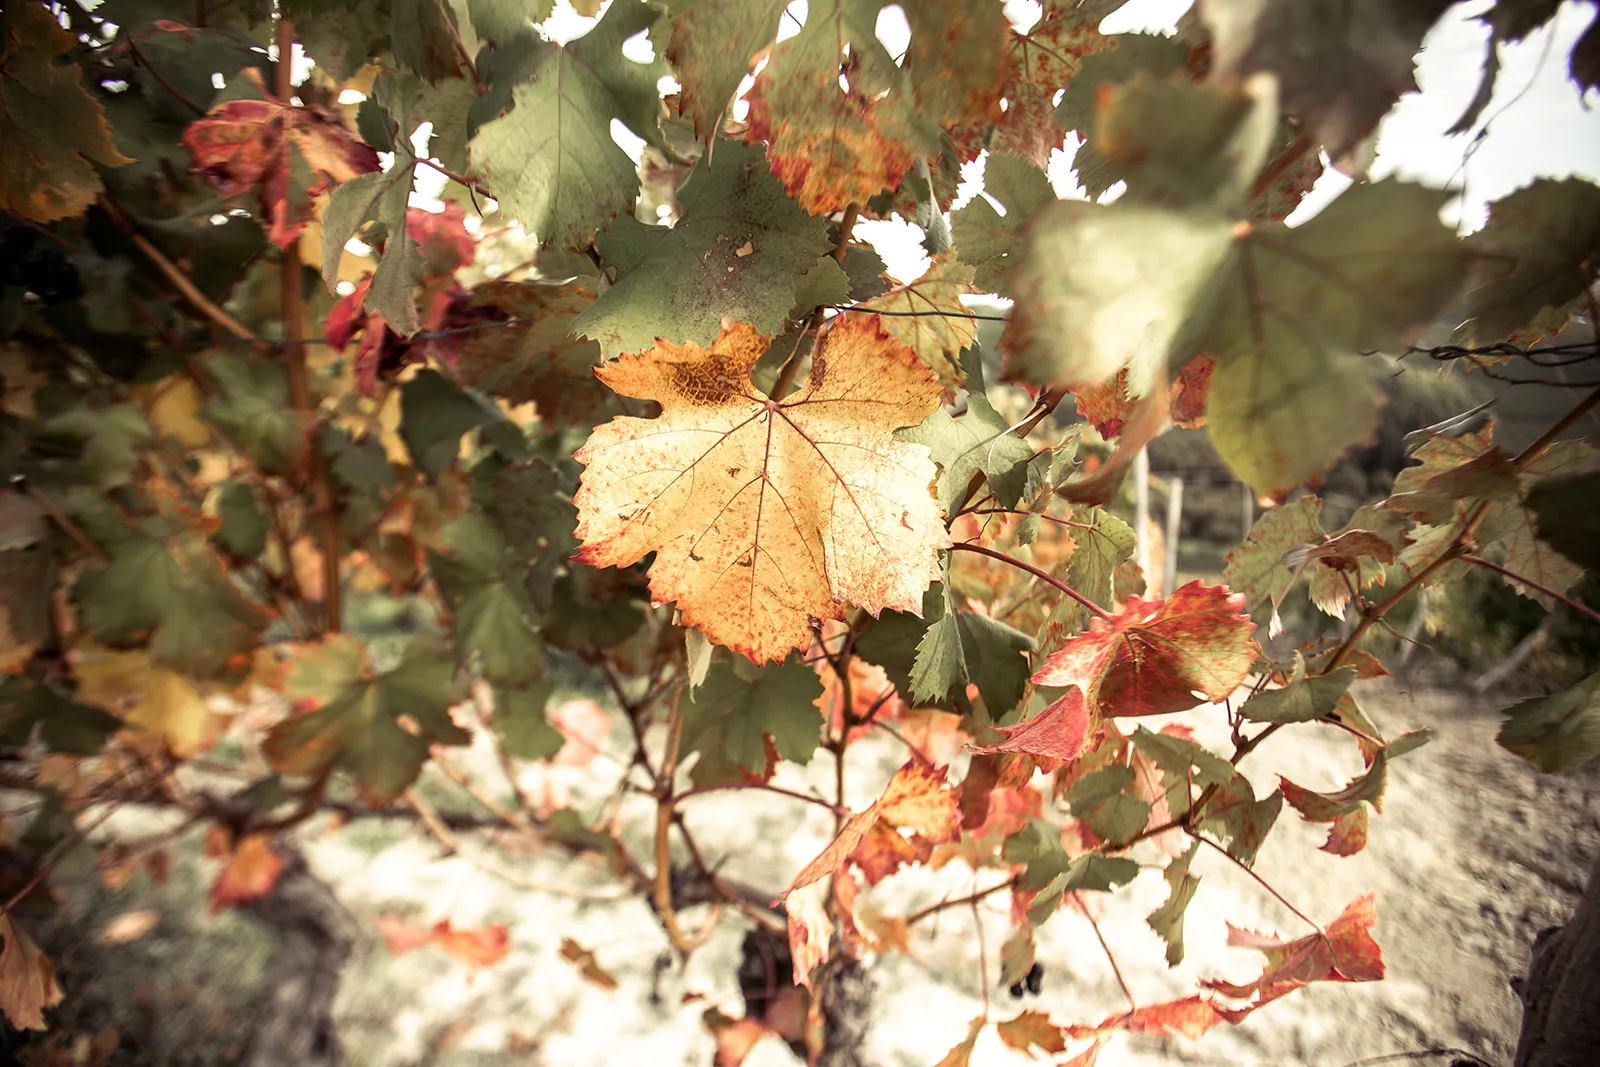 Detail with leaf from the Poderi Fogliati vineyard.